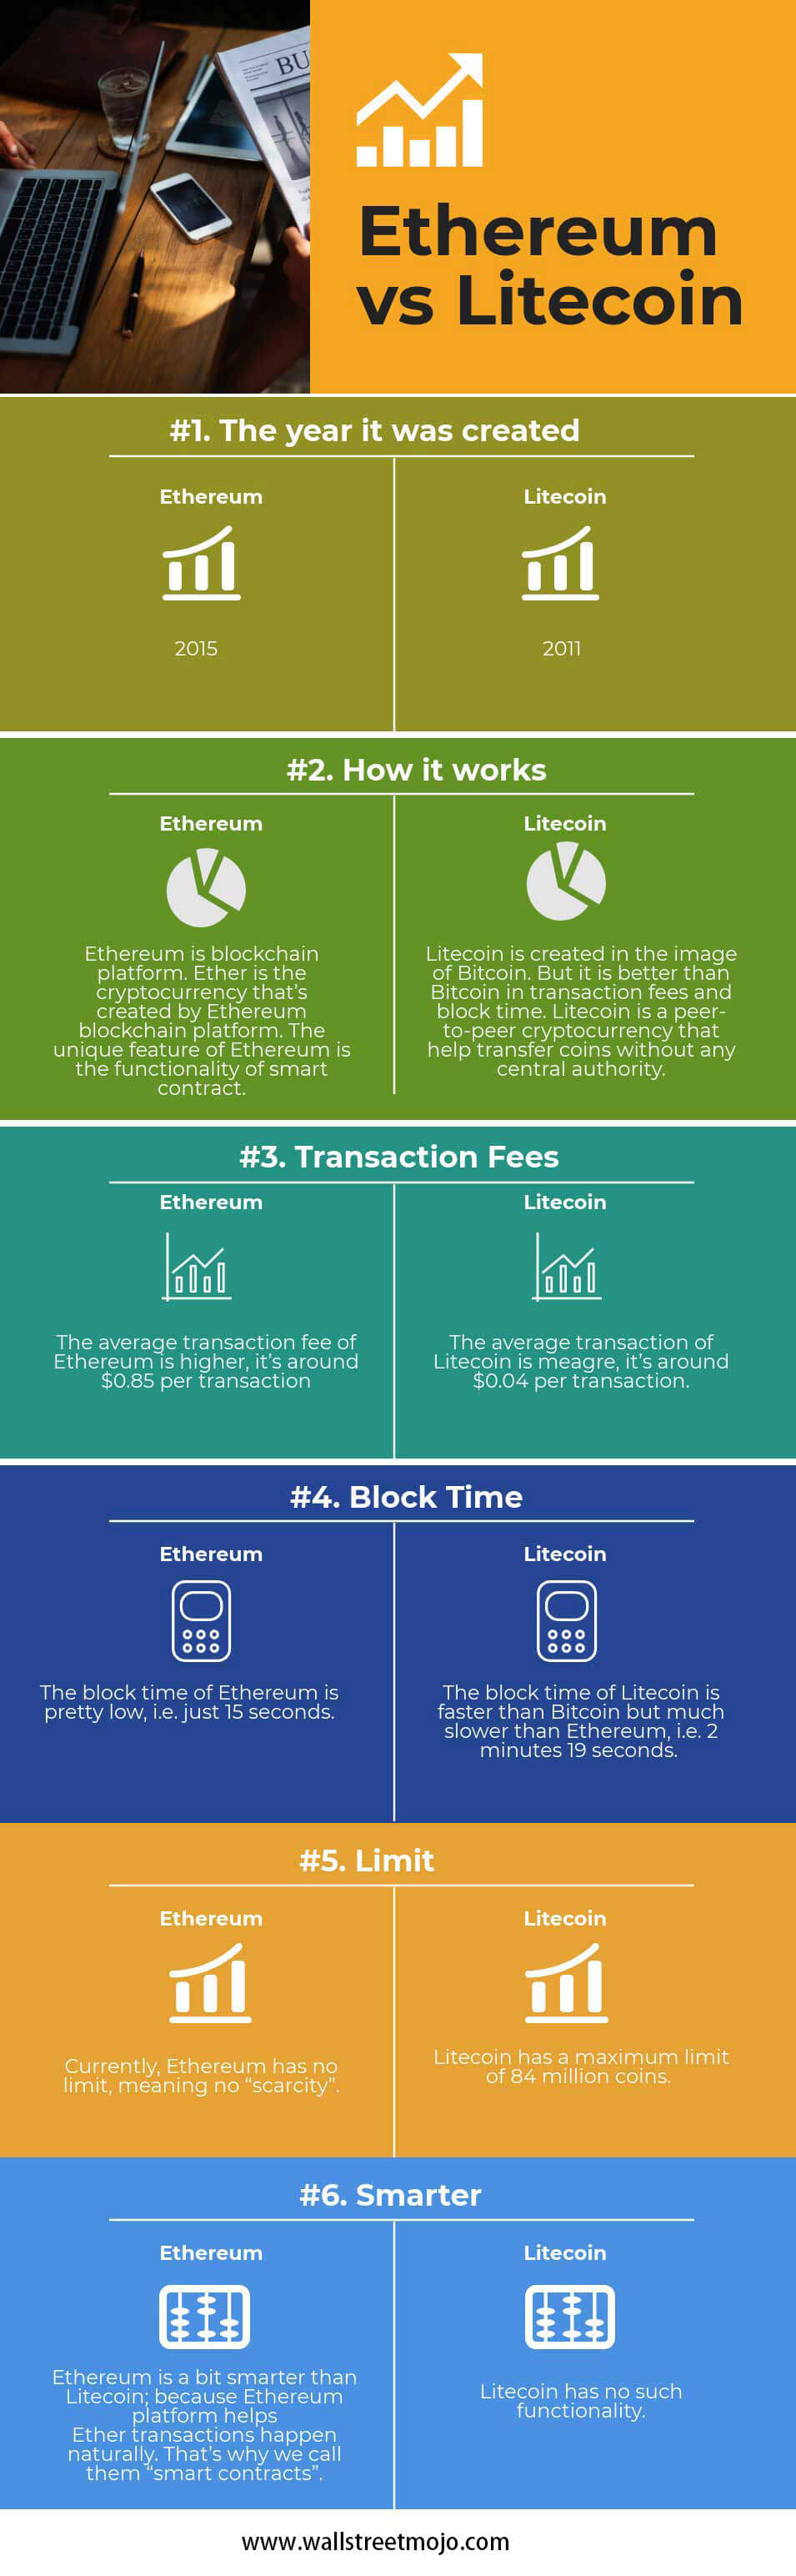 investiți în bitcoin vs ethereum vs litecoin